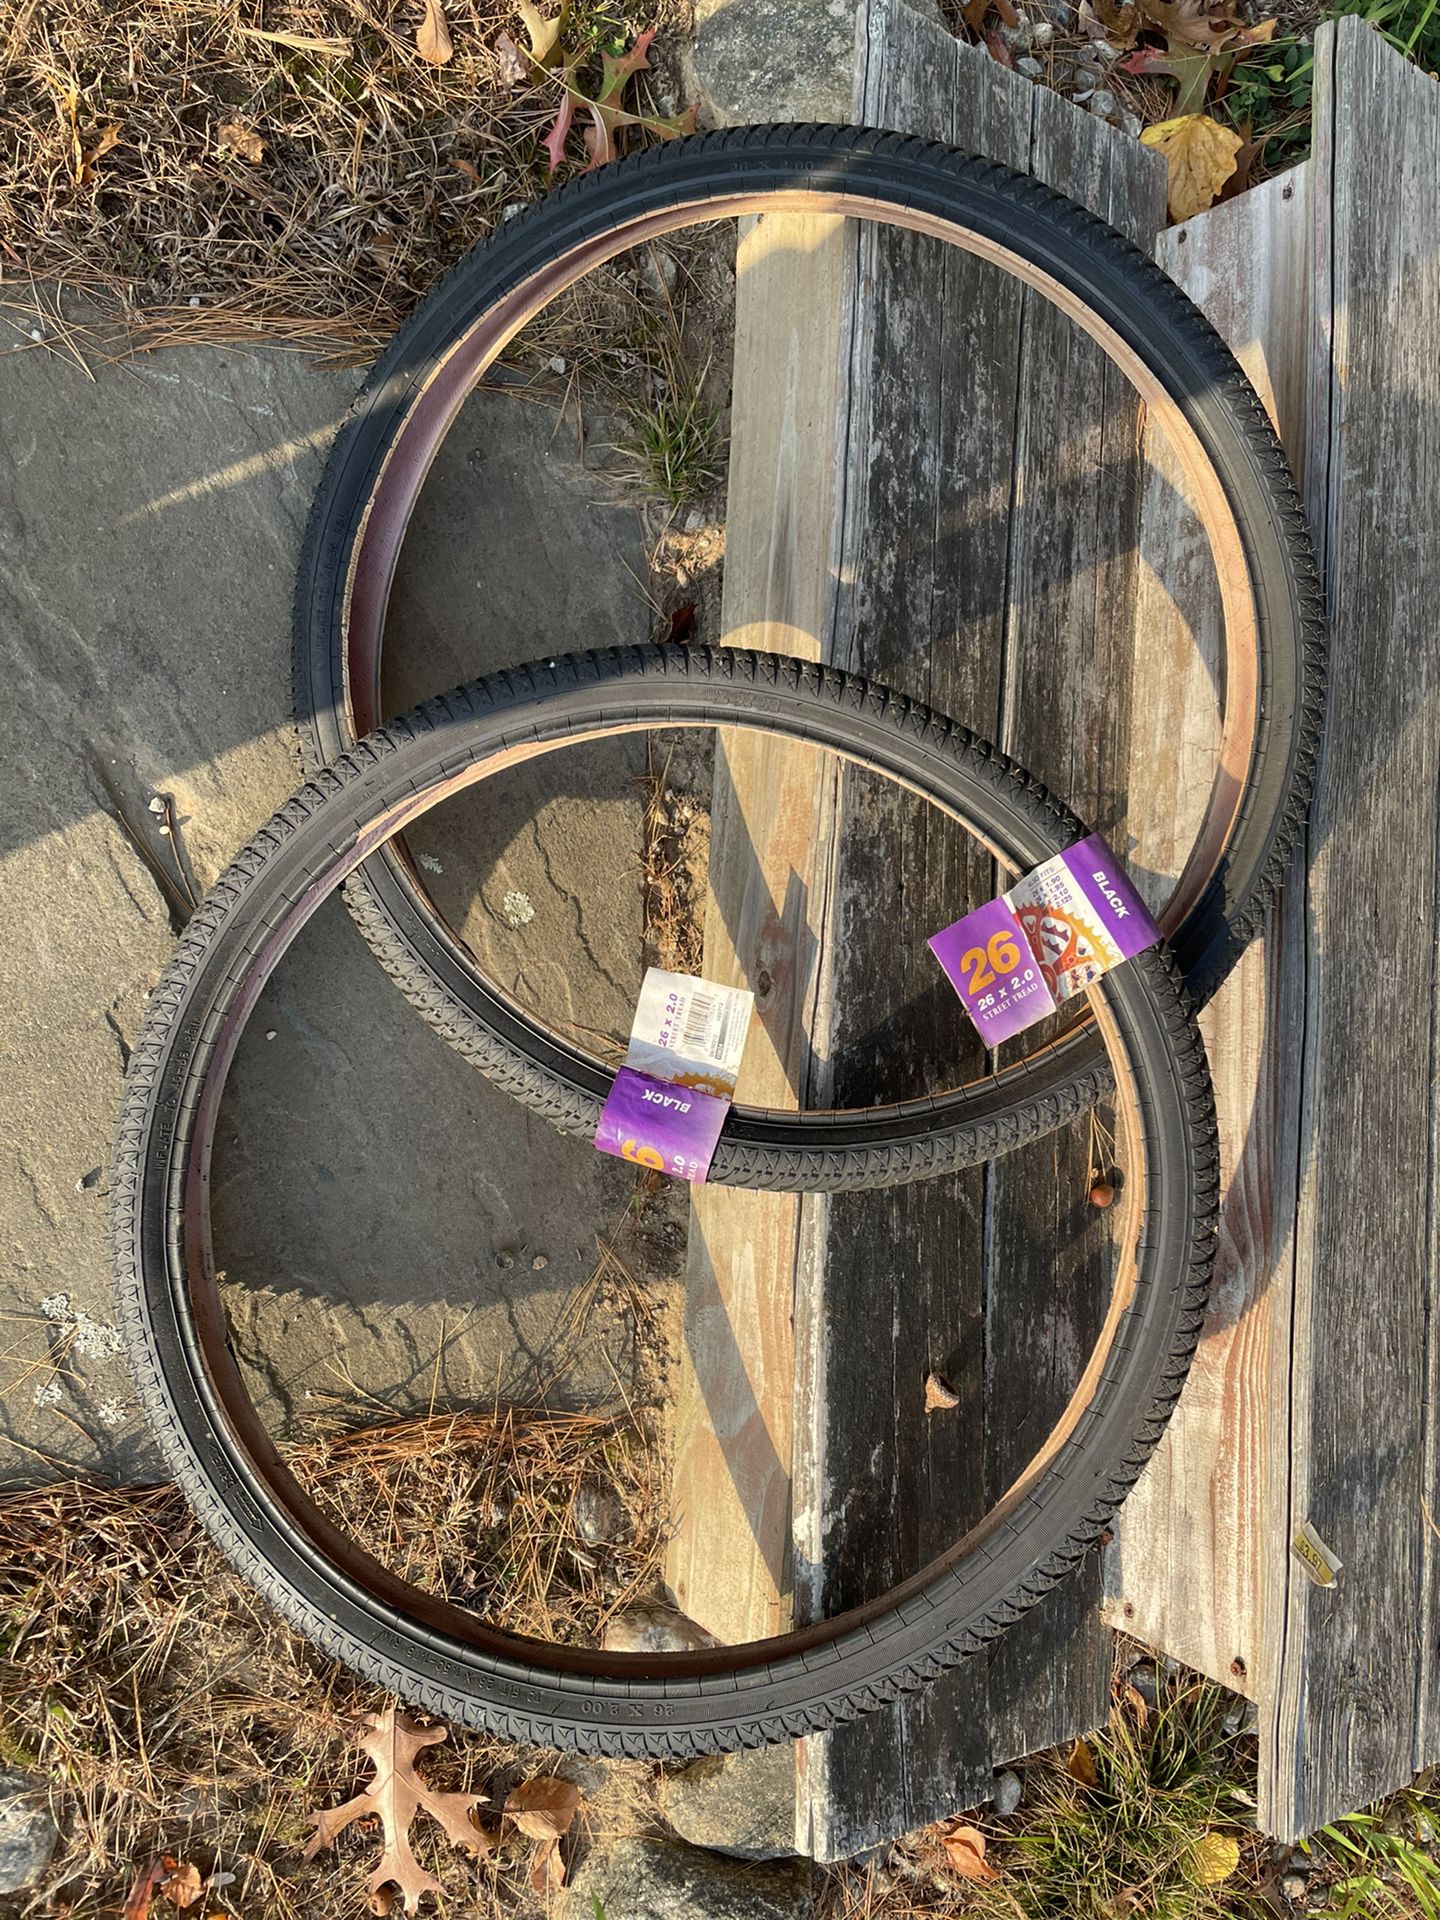 Set of 2 brand new 26” mountain bike tires $20